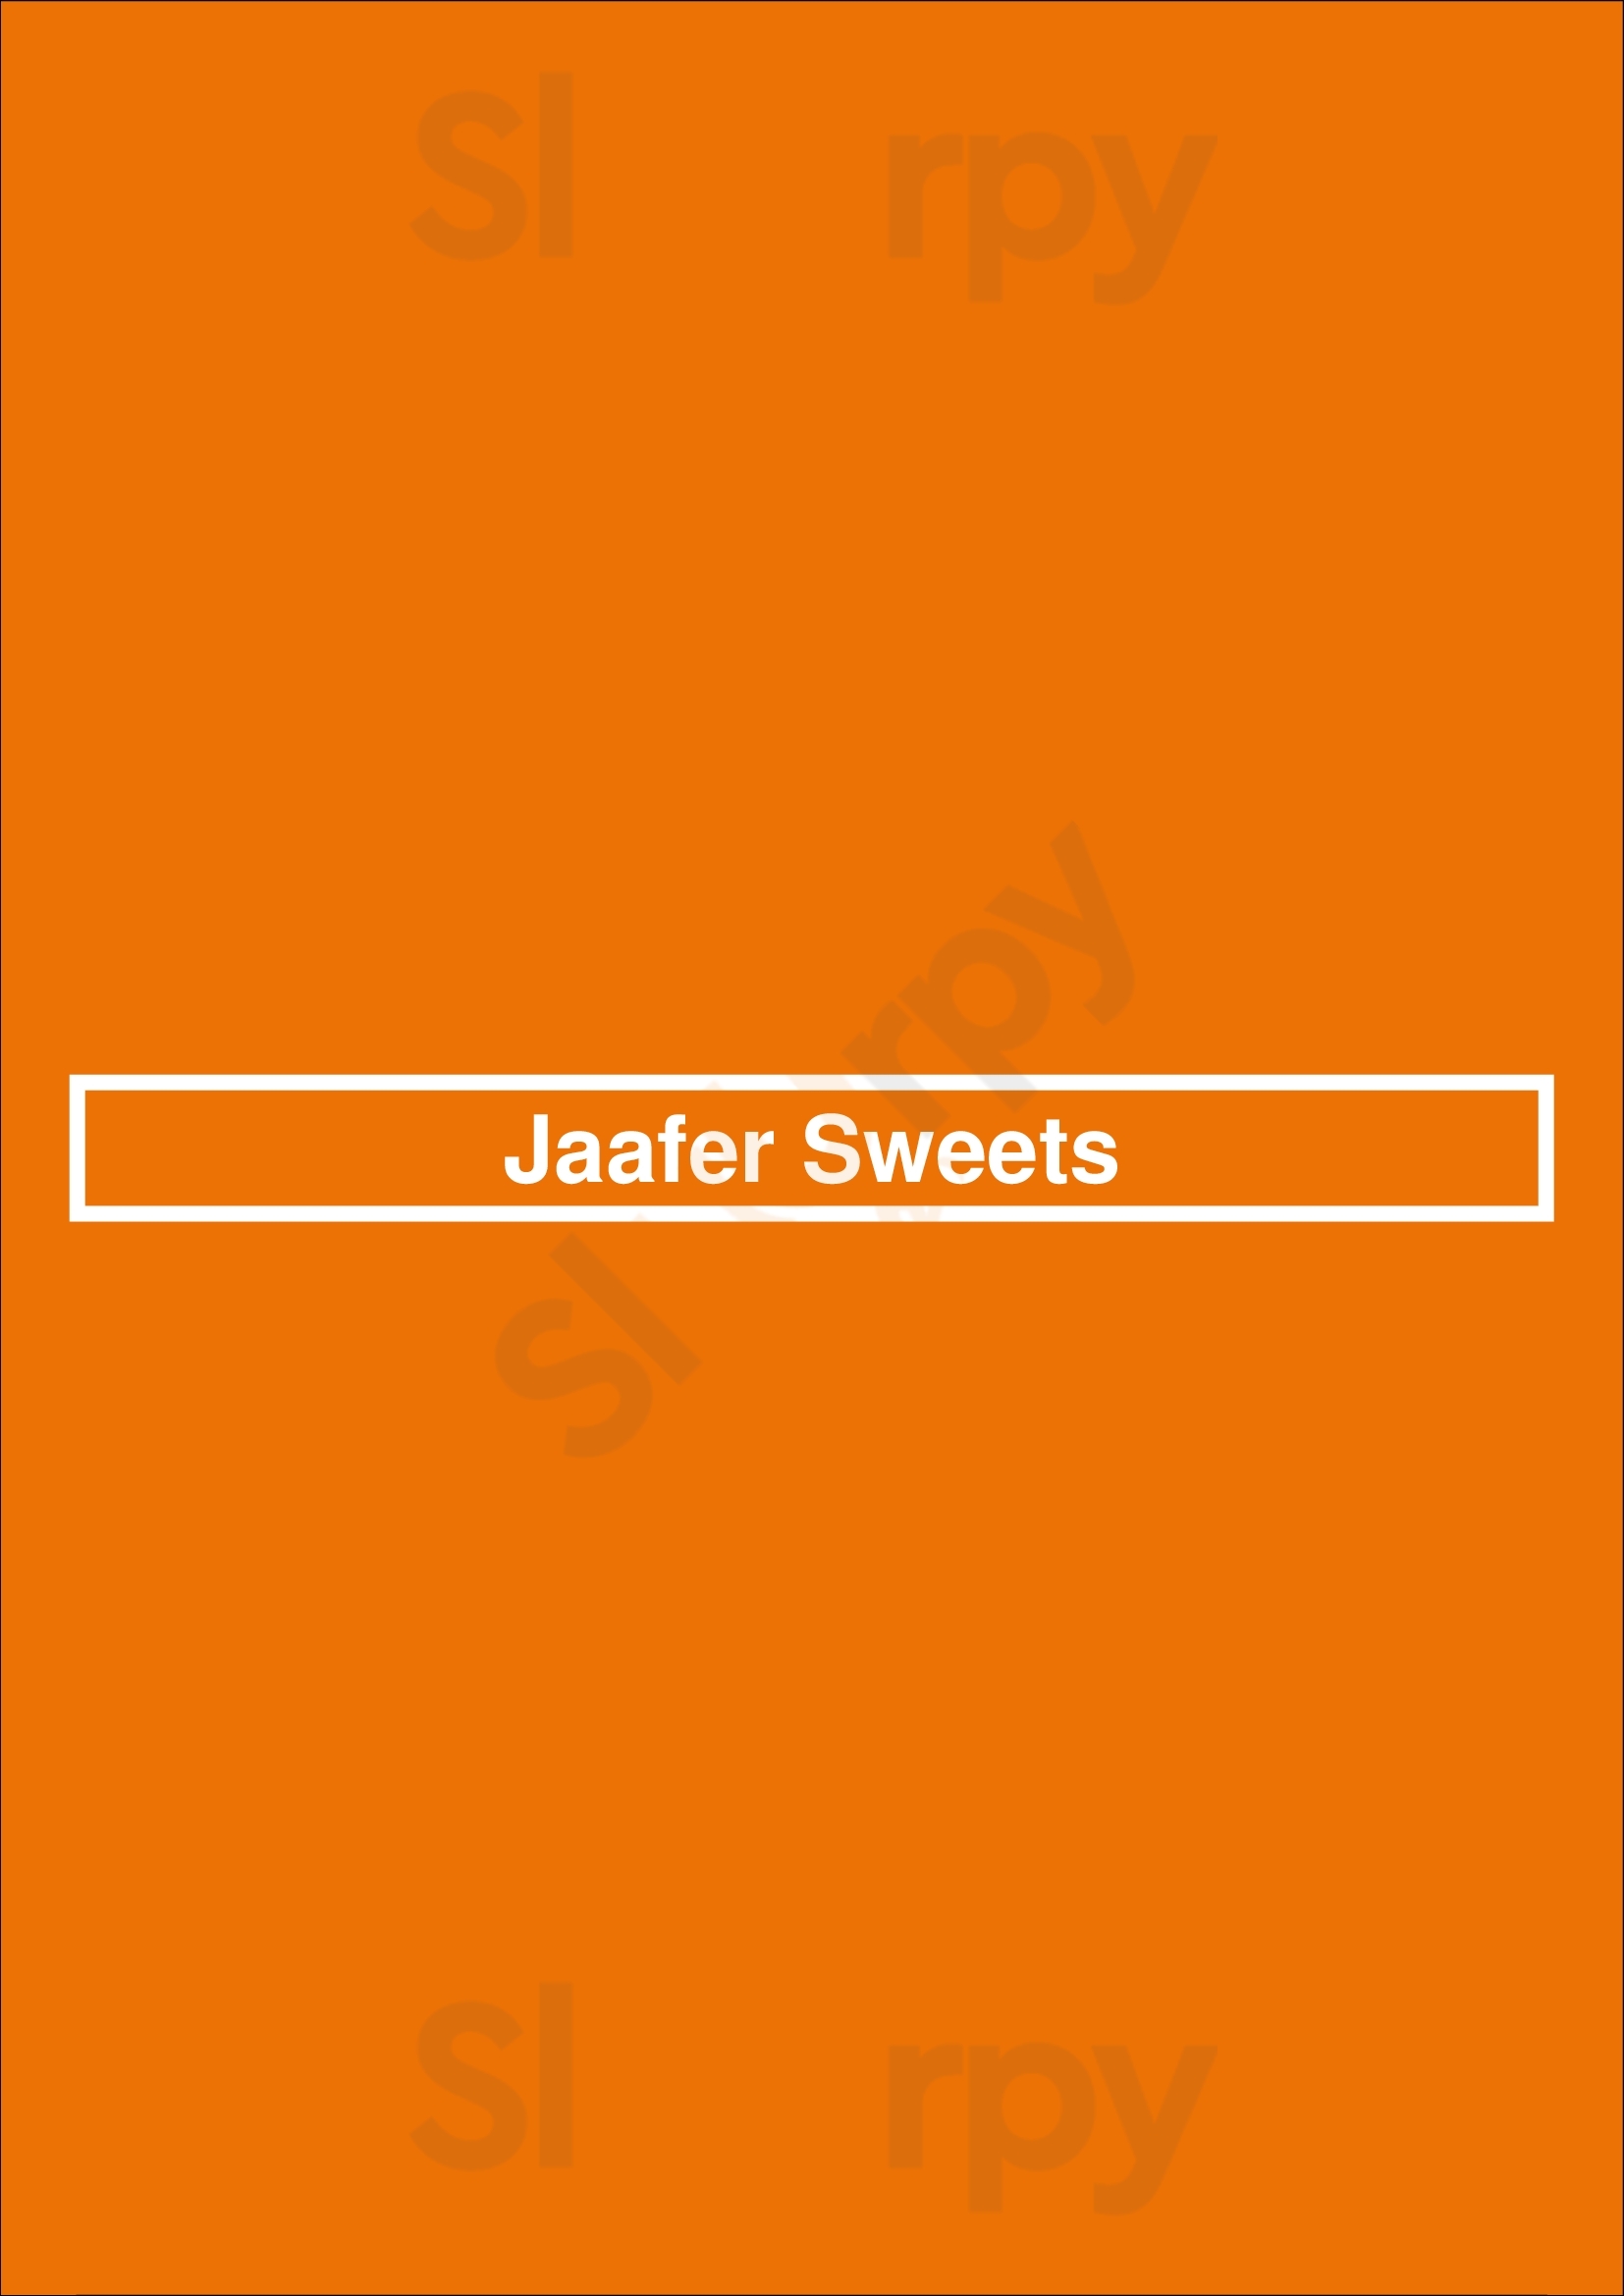 Jaafer Sweets Chicago Menu - 1